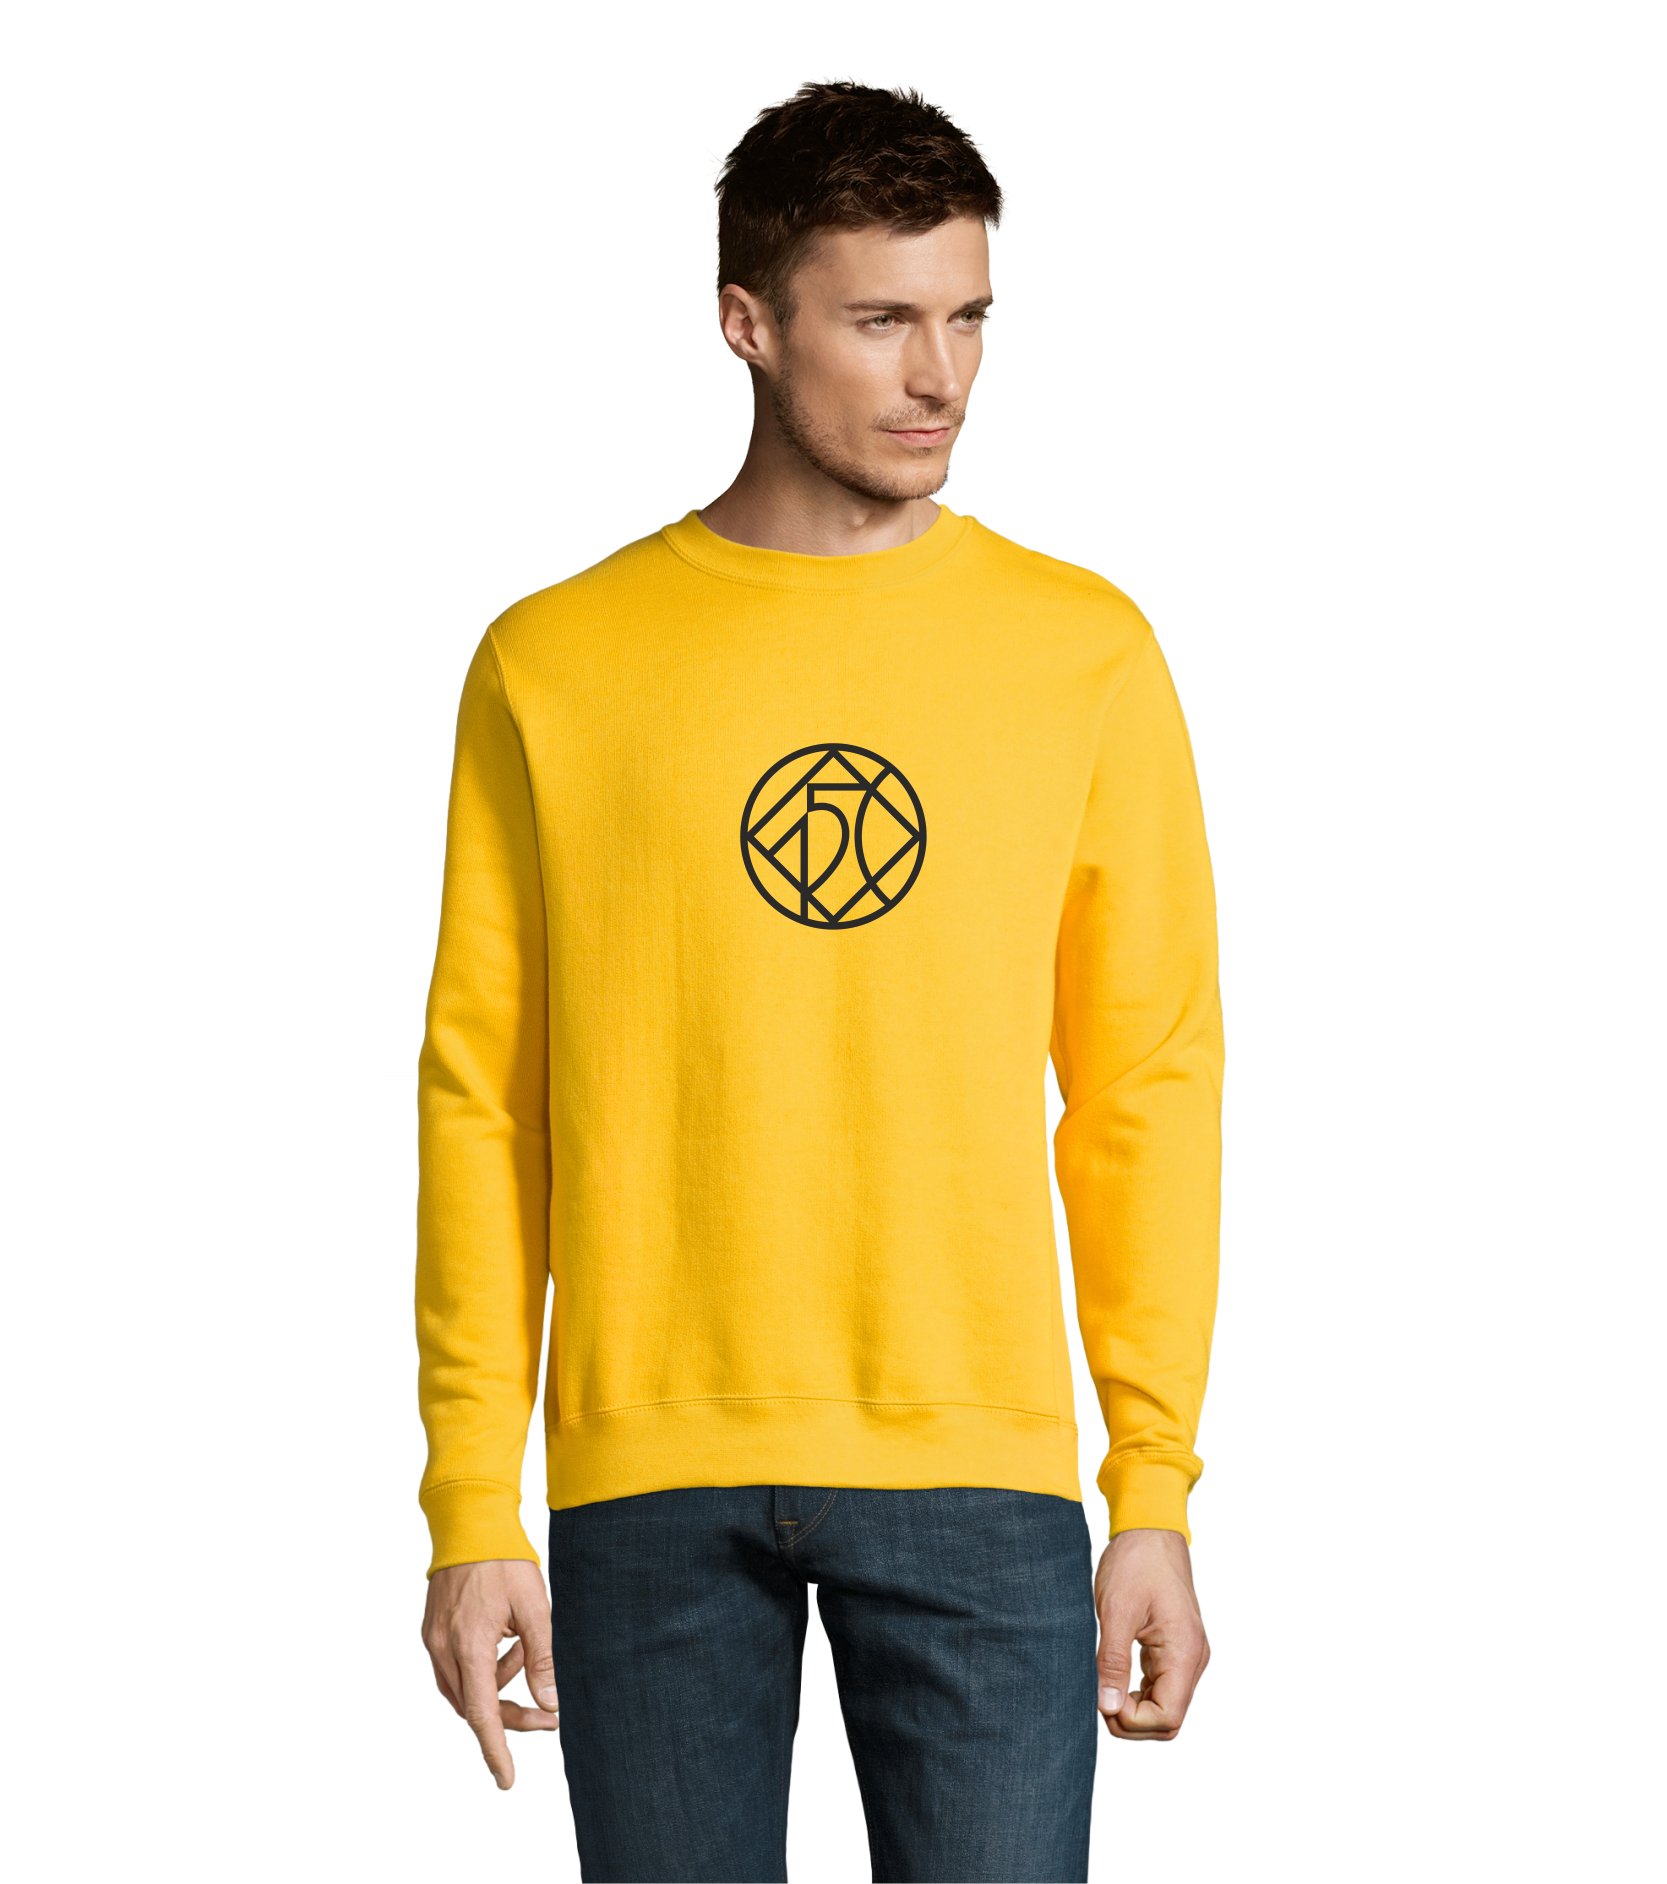 Unisex džemperis "Skābardis" ar lielo simbolu